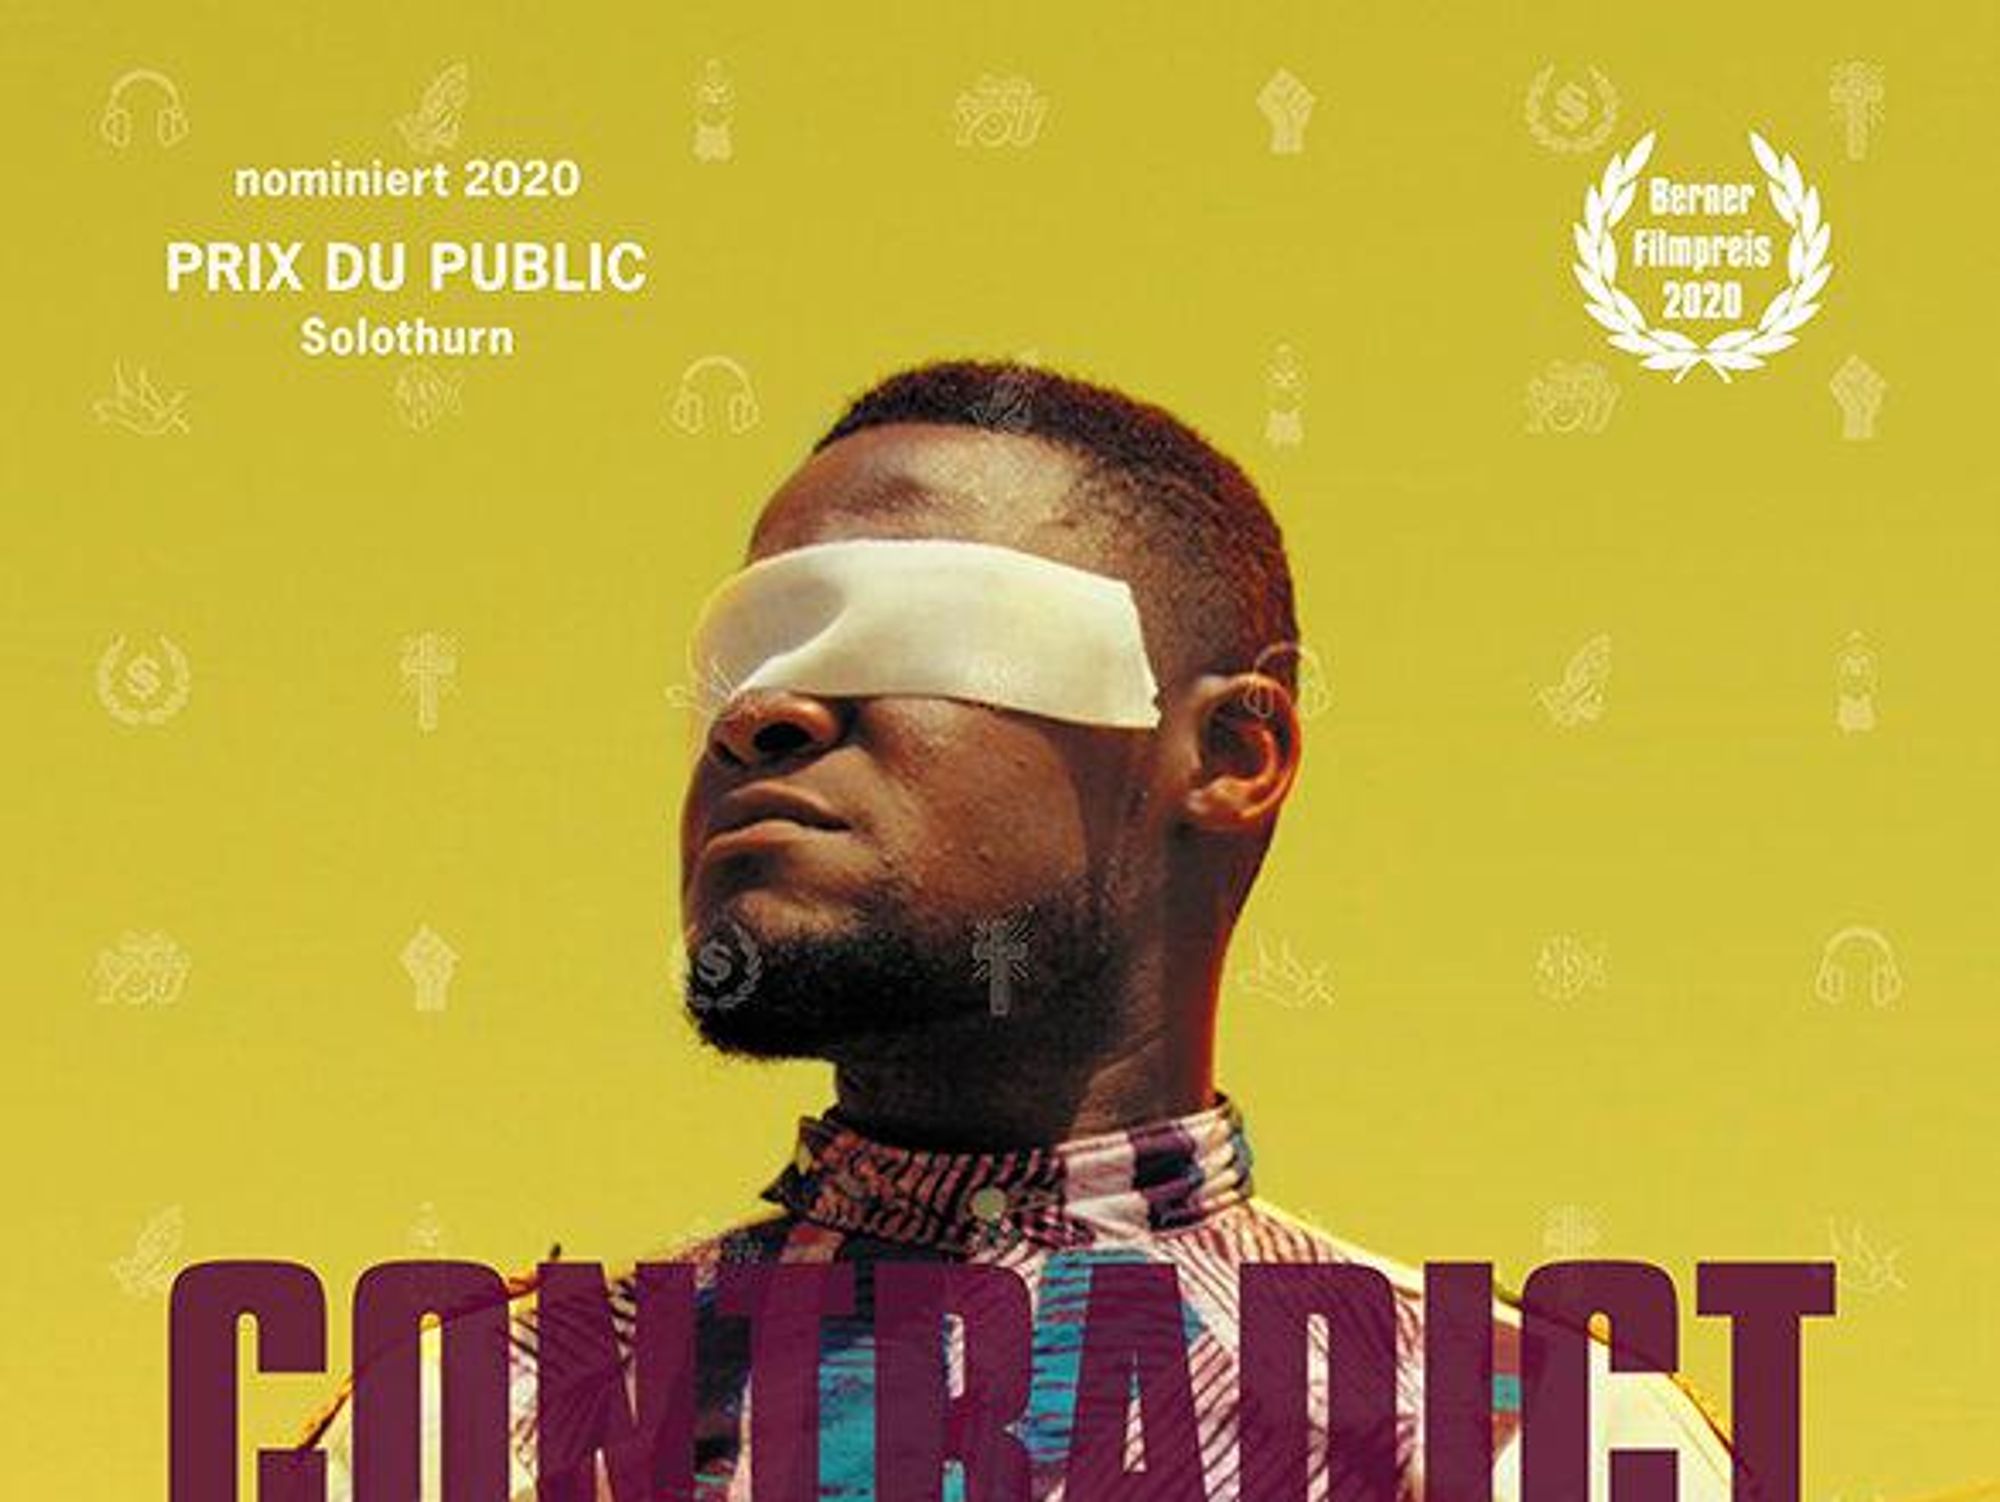 FOKN Bois & the New 'Contradict' Documentary Highlight Despair and Hope in Ghana